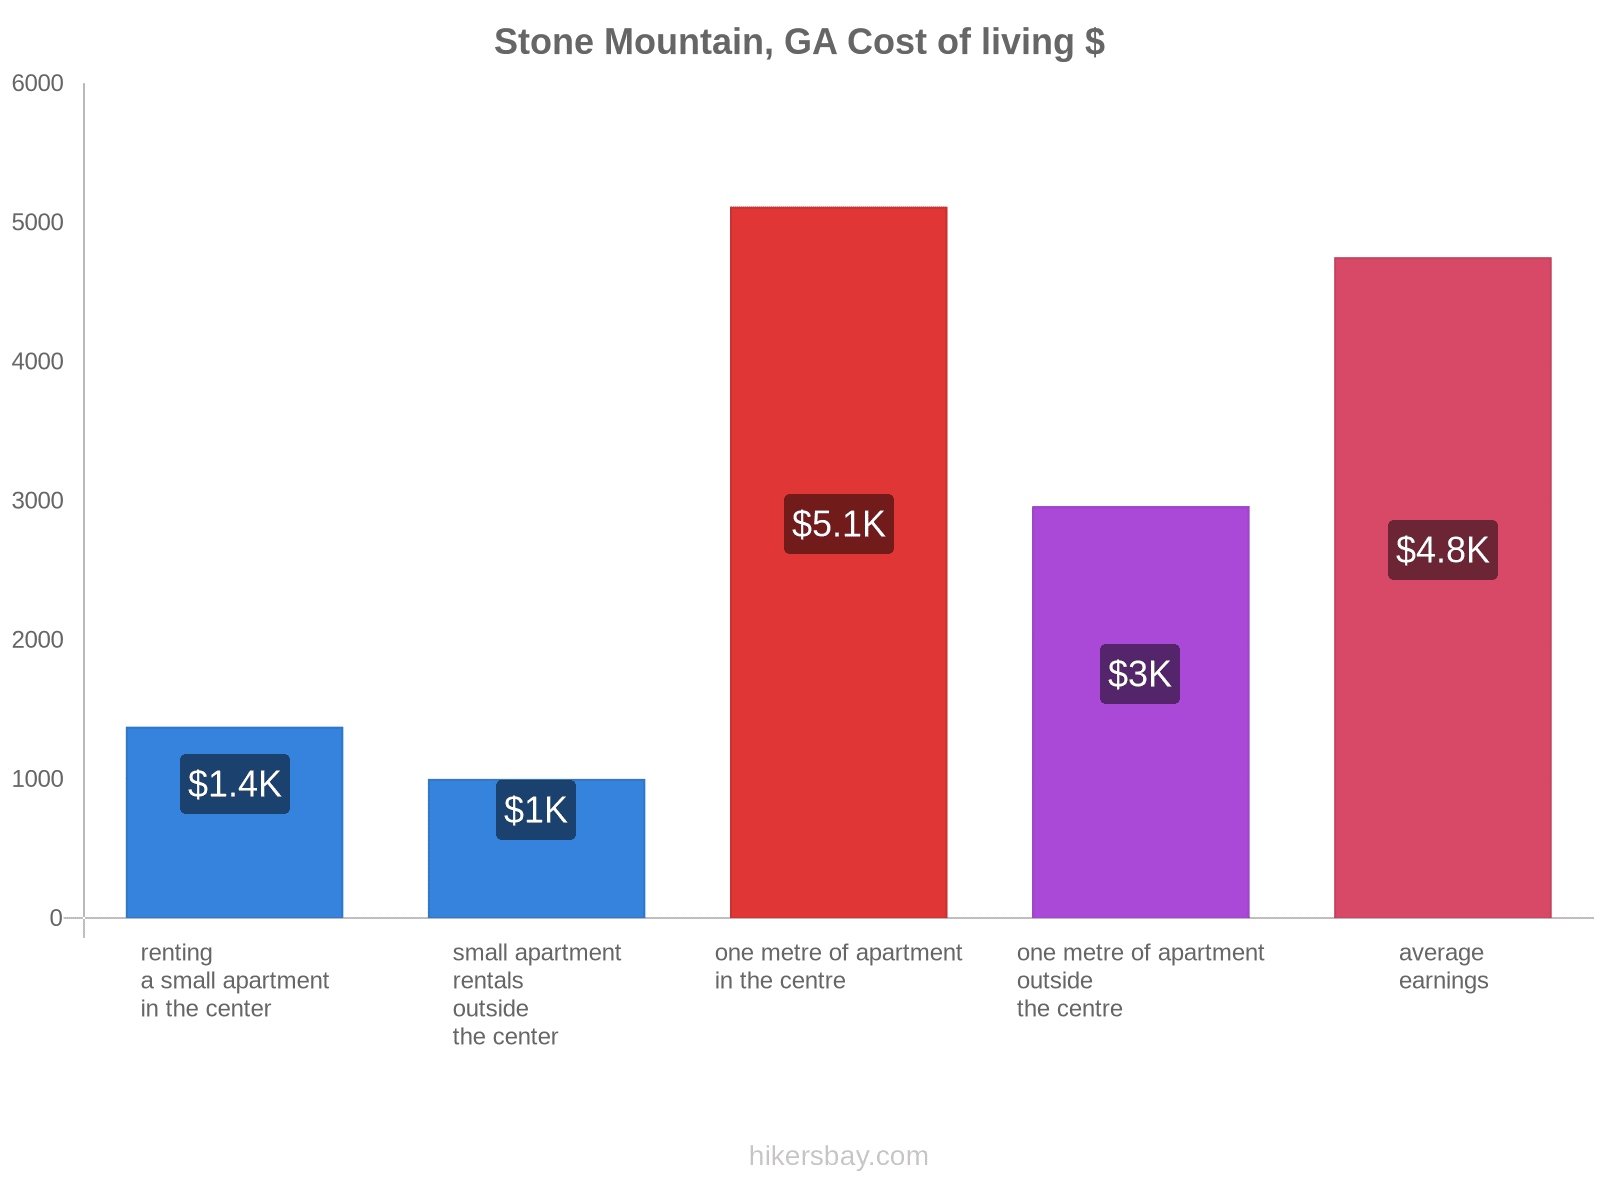 Stone Mountain, GA cost of living hikersbay.com